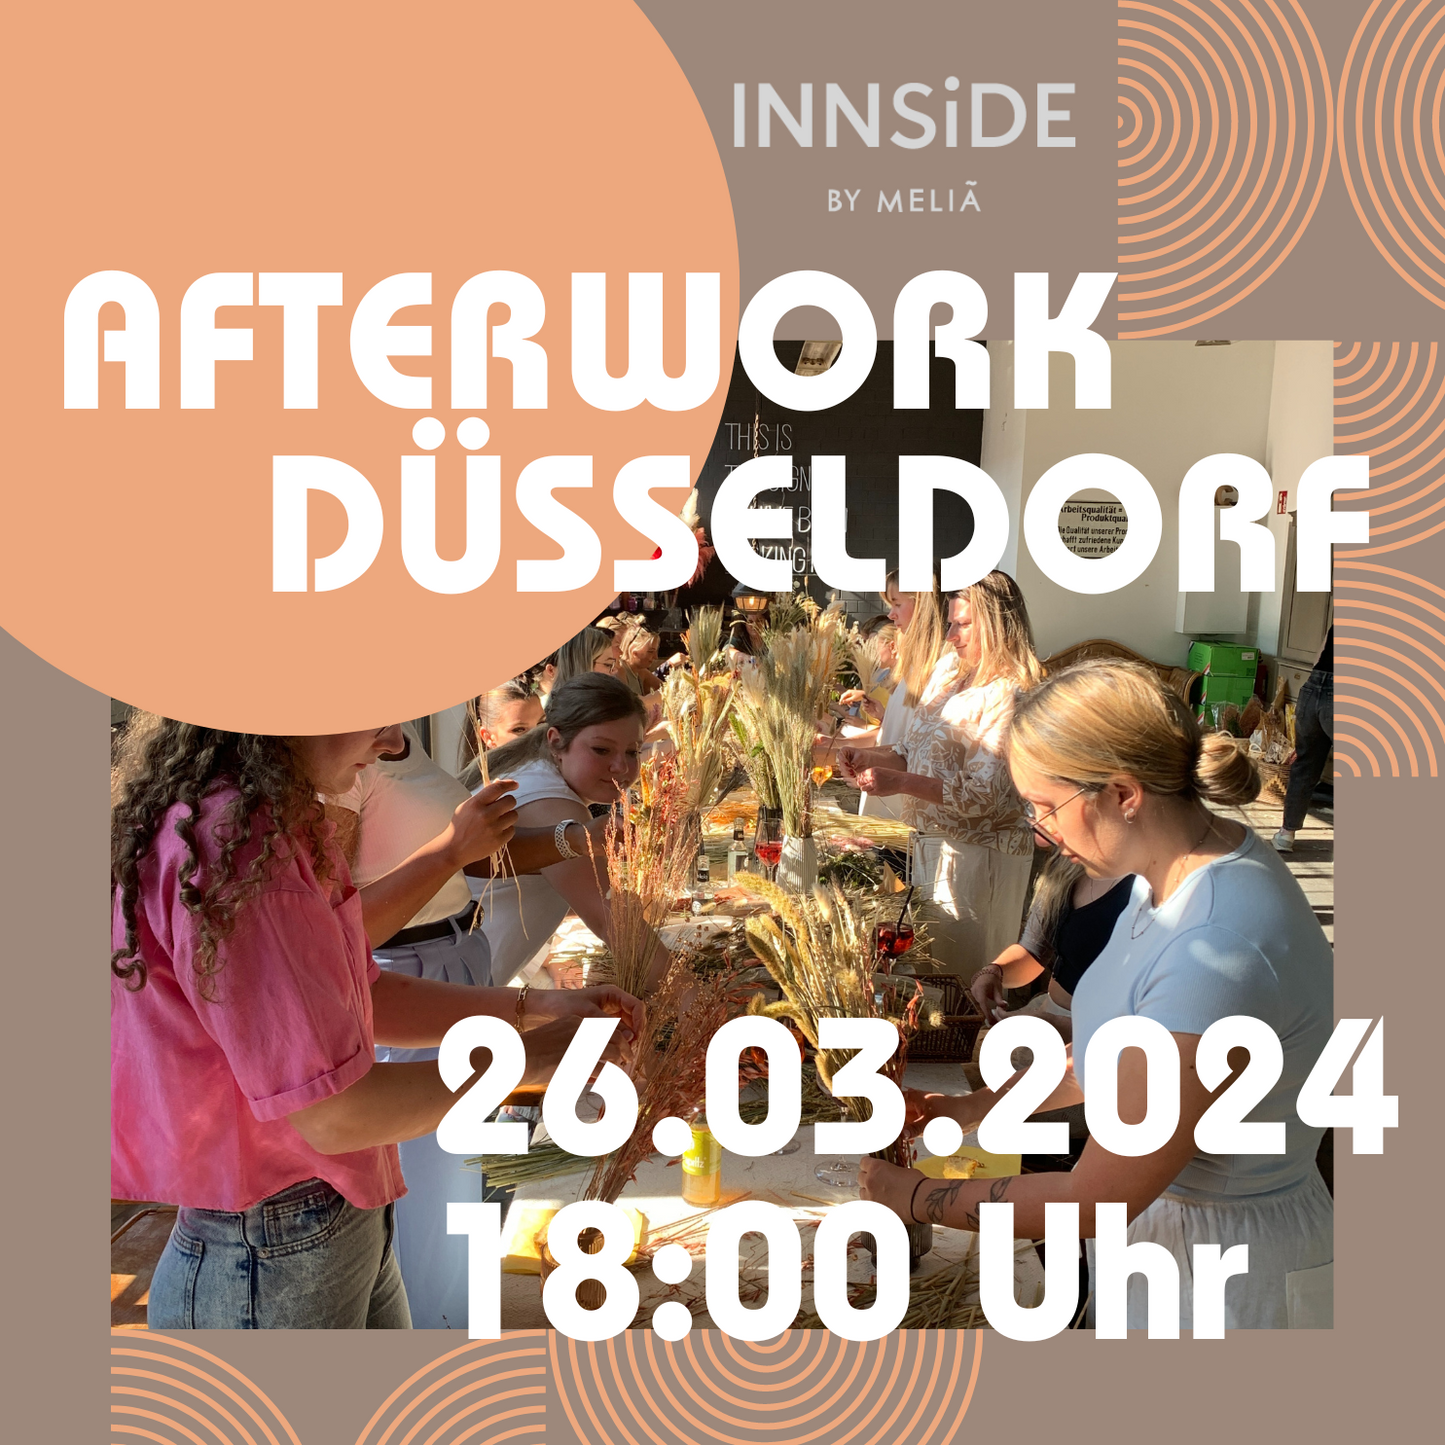 AFTERWORK - Trockenblumenbouquet Workshop INNSIDE Am Seestern Düsseldorf 26.03.2024 18 Uhr